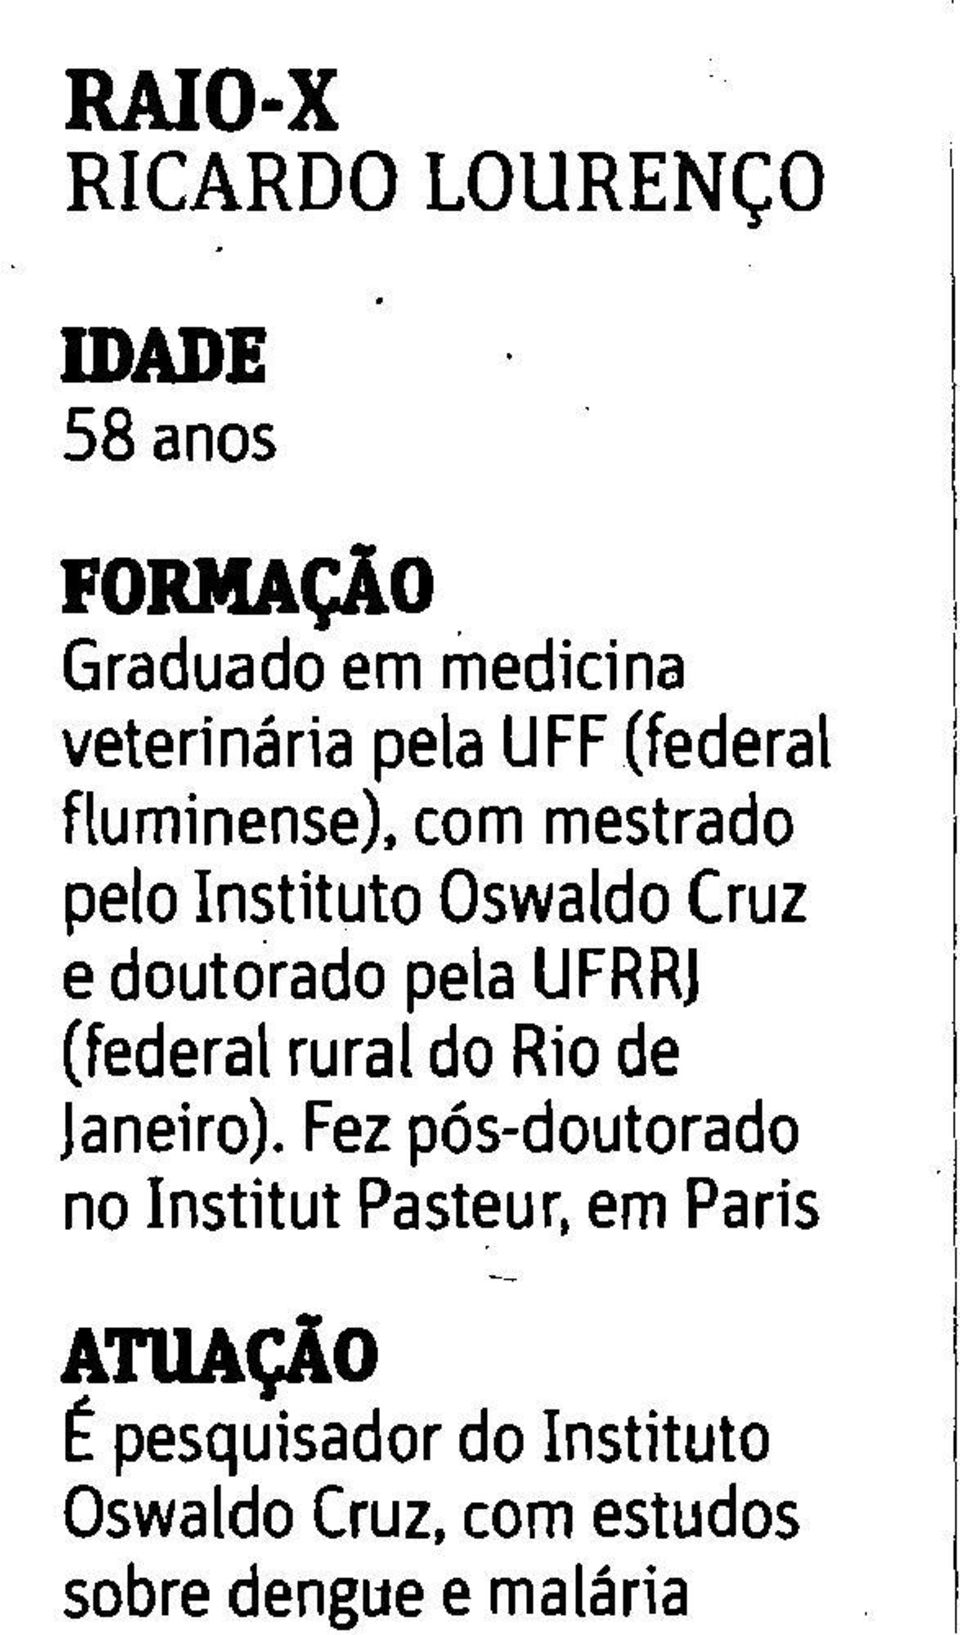 UFRRJ (federal rural do Rio de Janeiro).